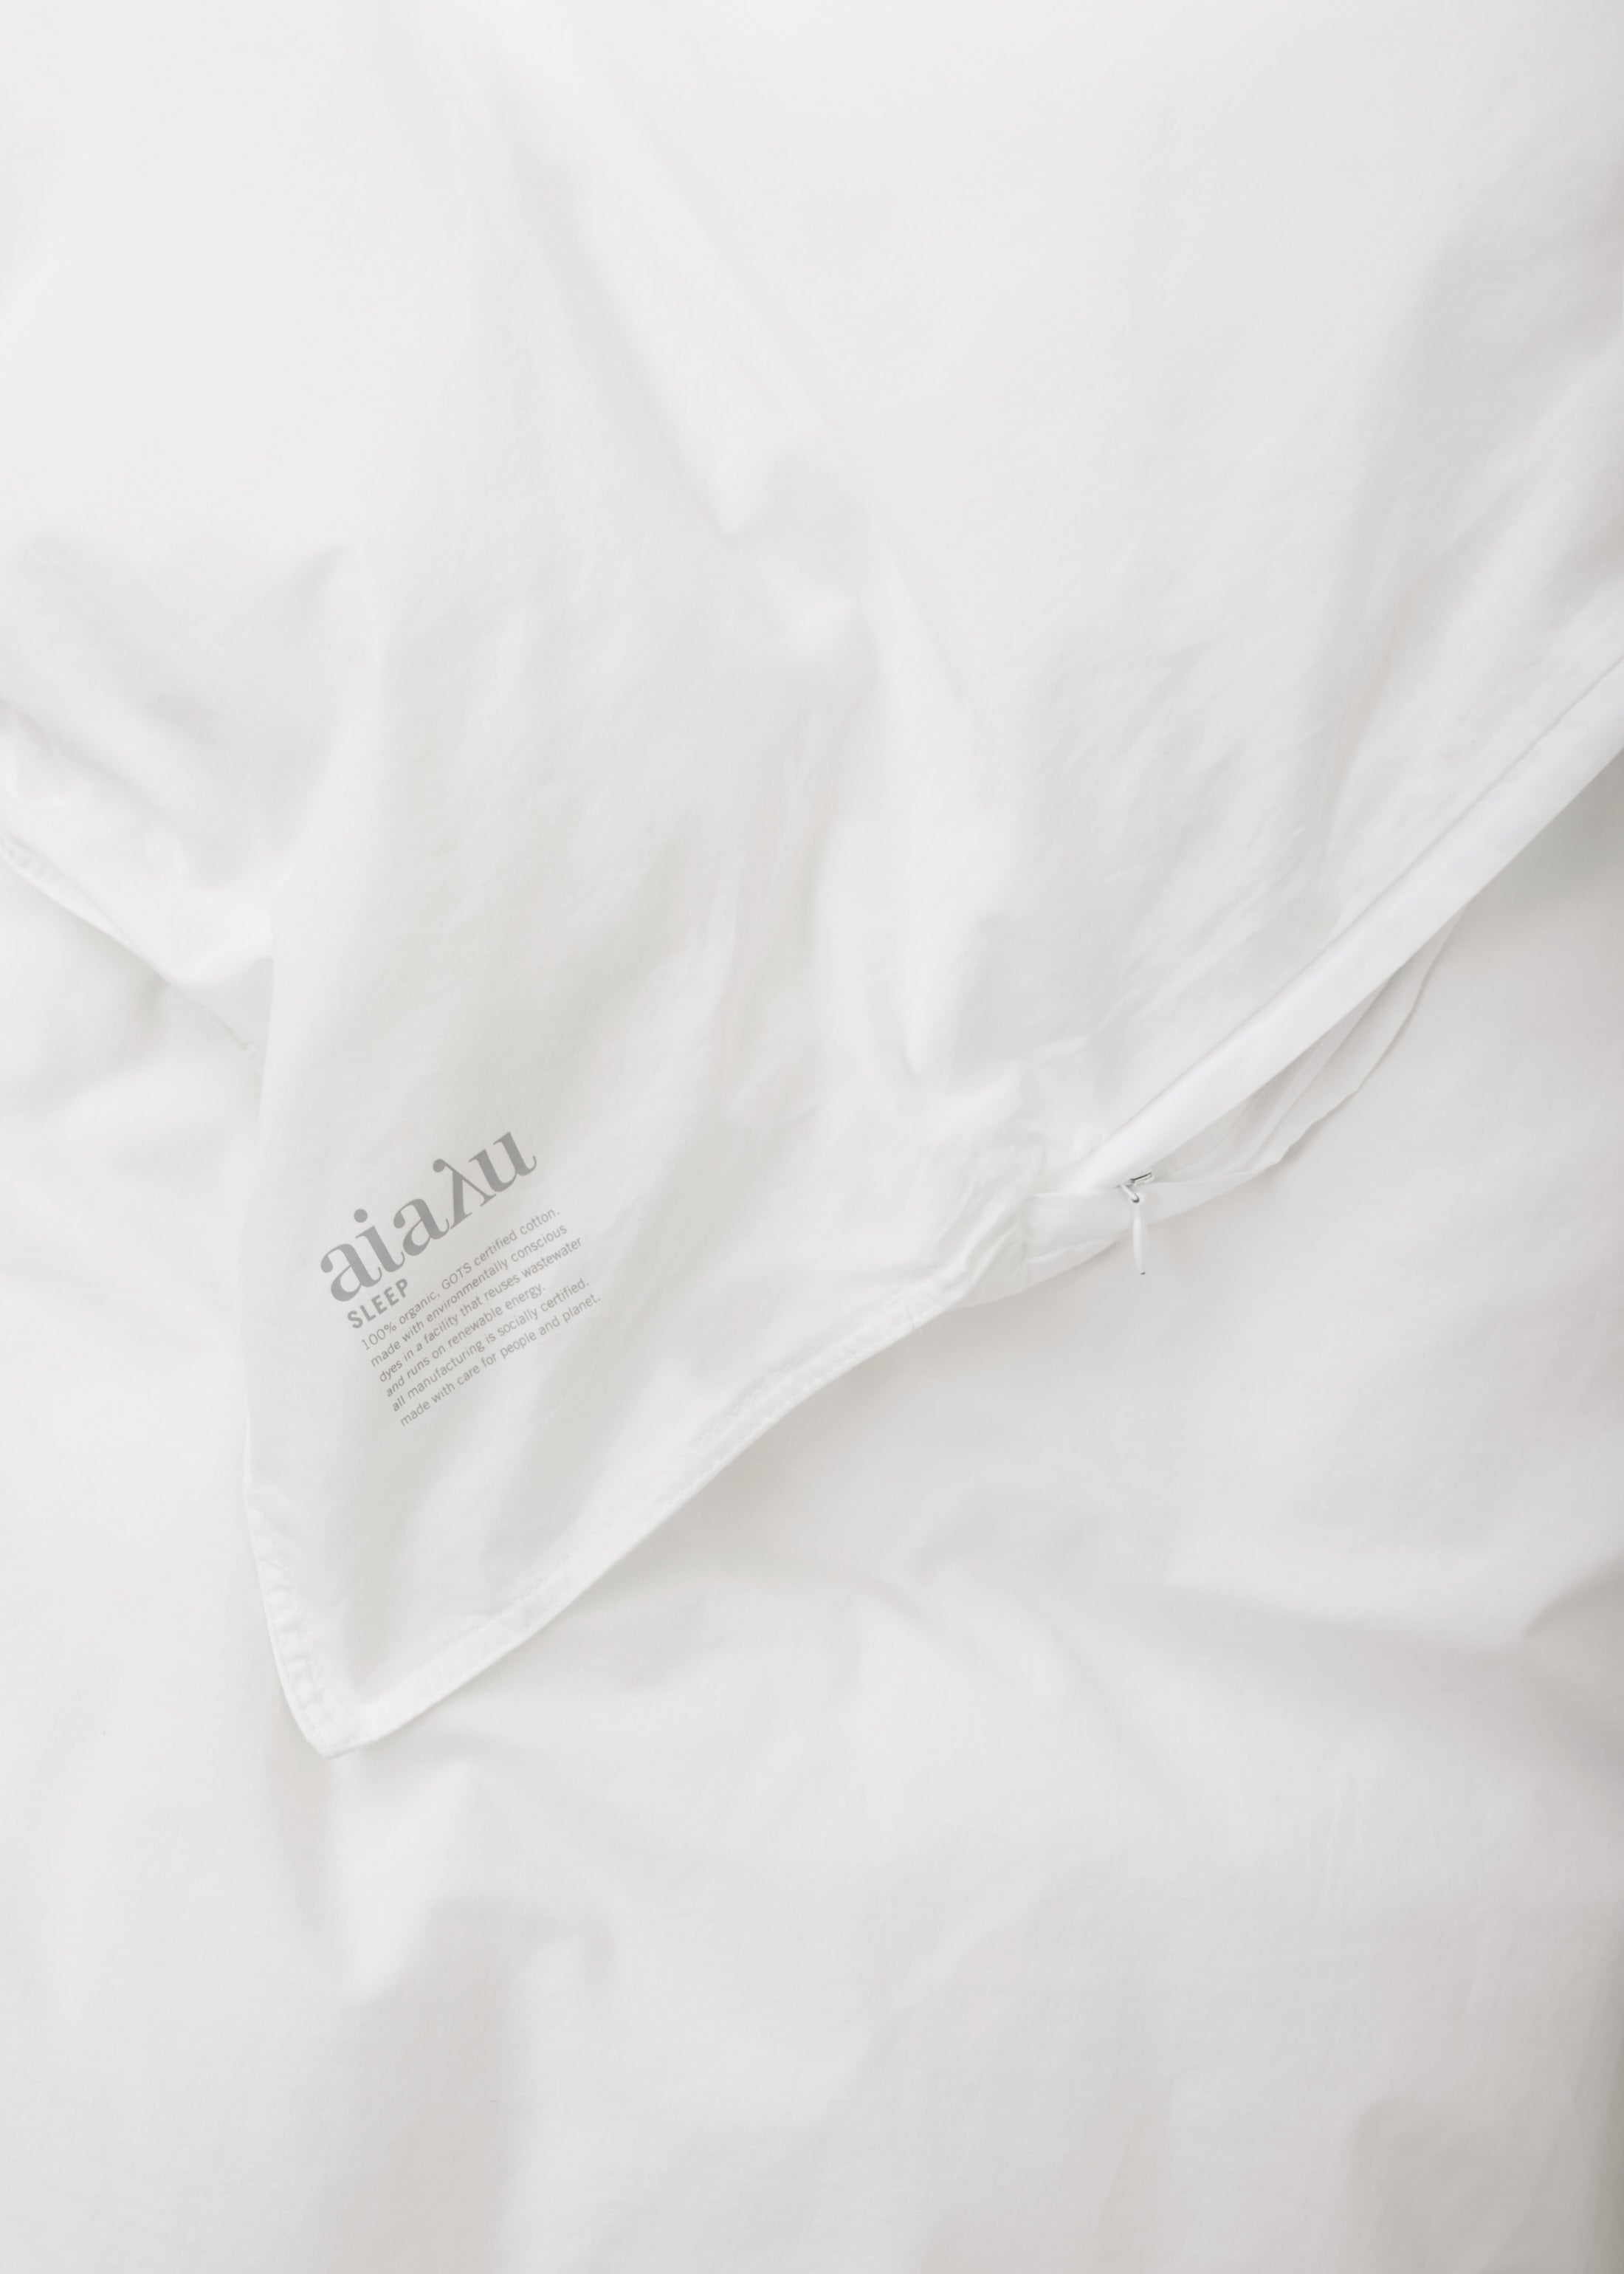 Duvet set 200x220 & pillow cases - white | White